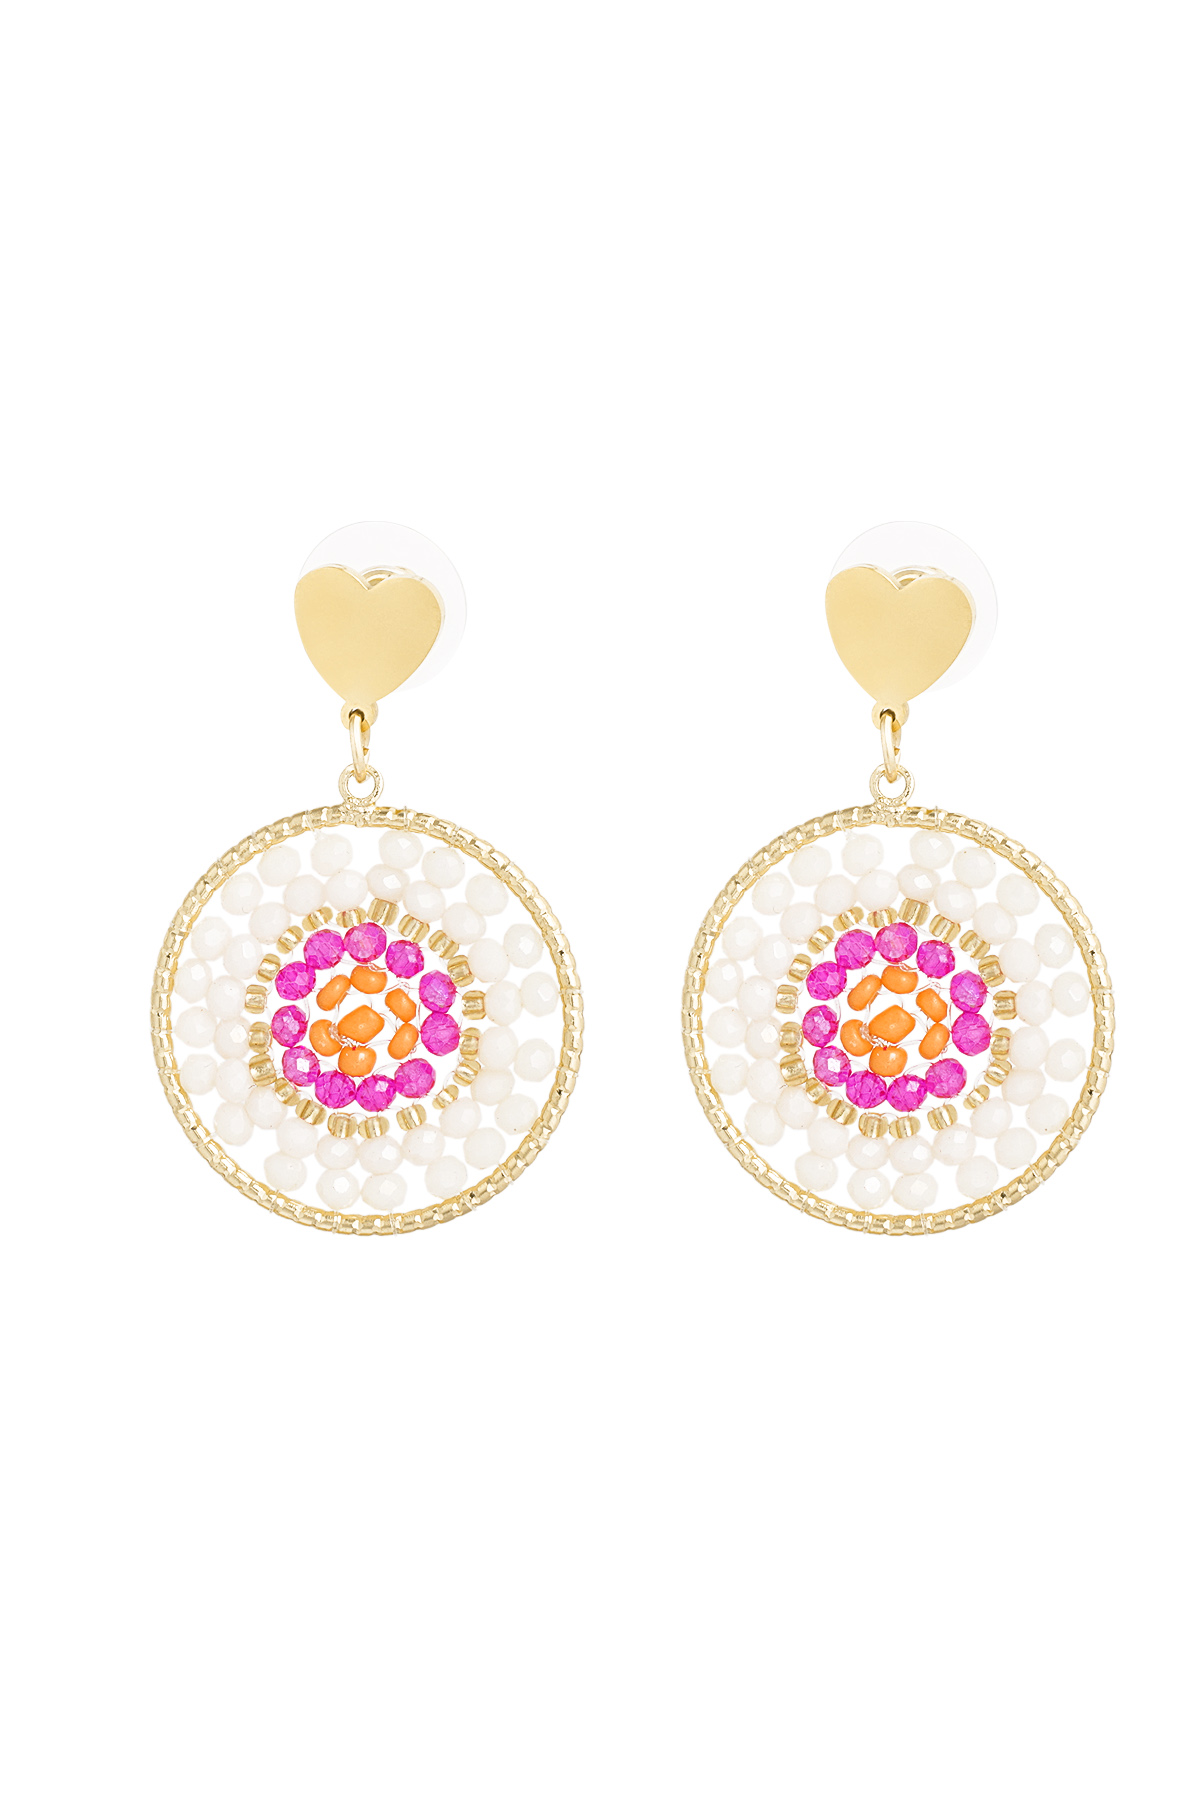 Mandala-Ohrringe mit Herz – mehrfarbig